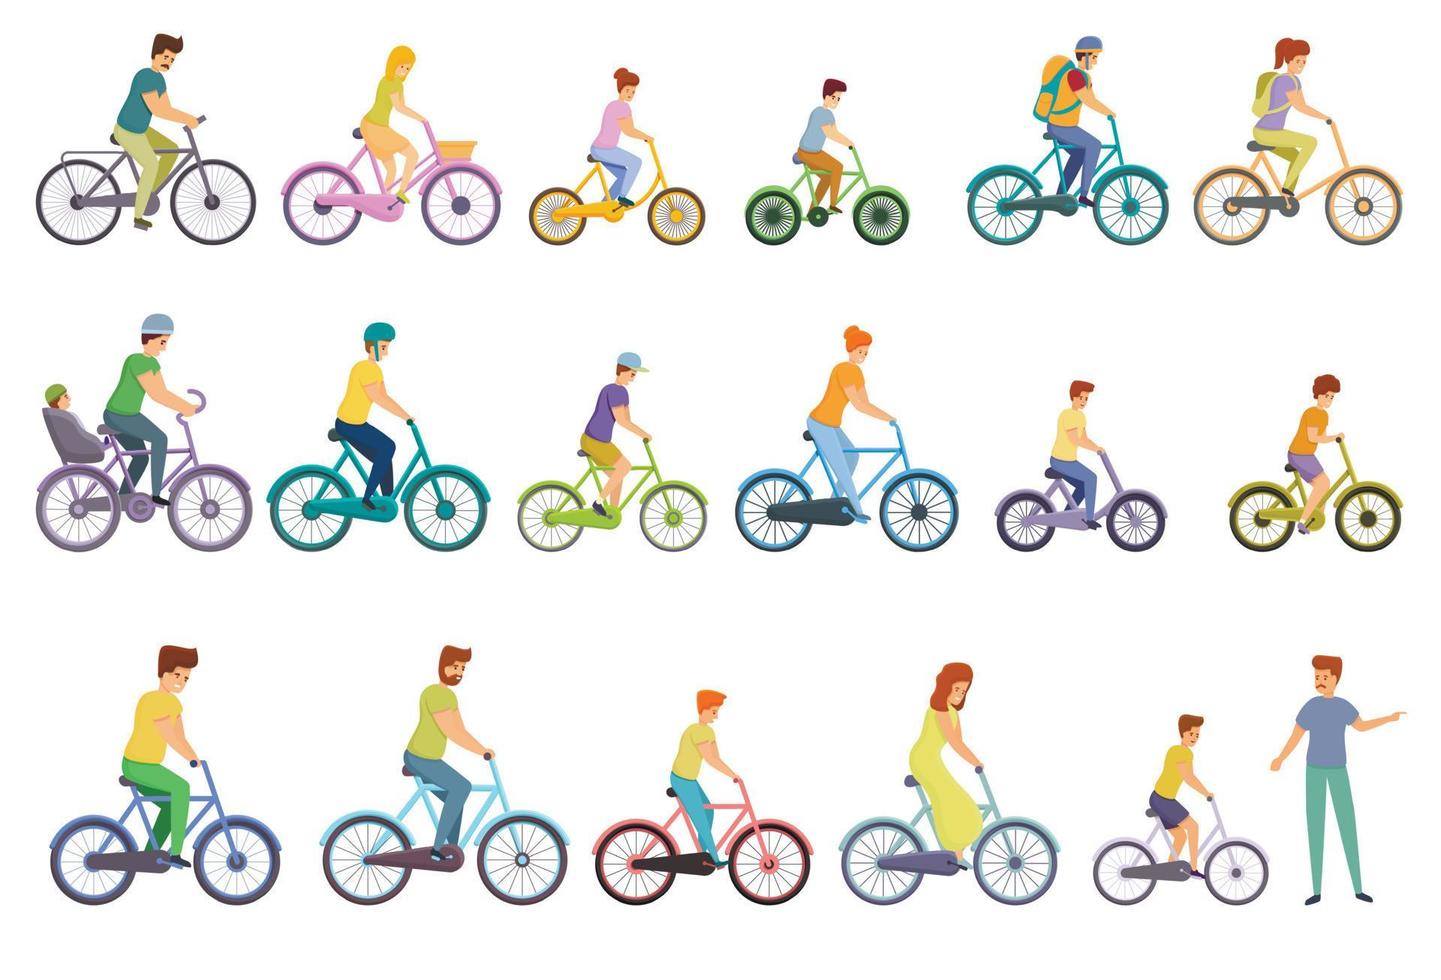 Bike family icons set, cartoon style vector